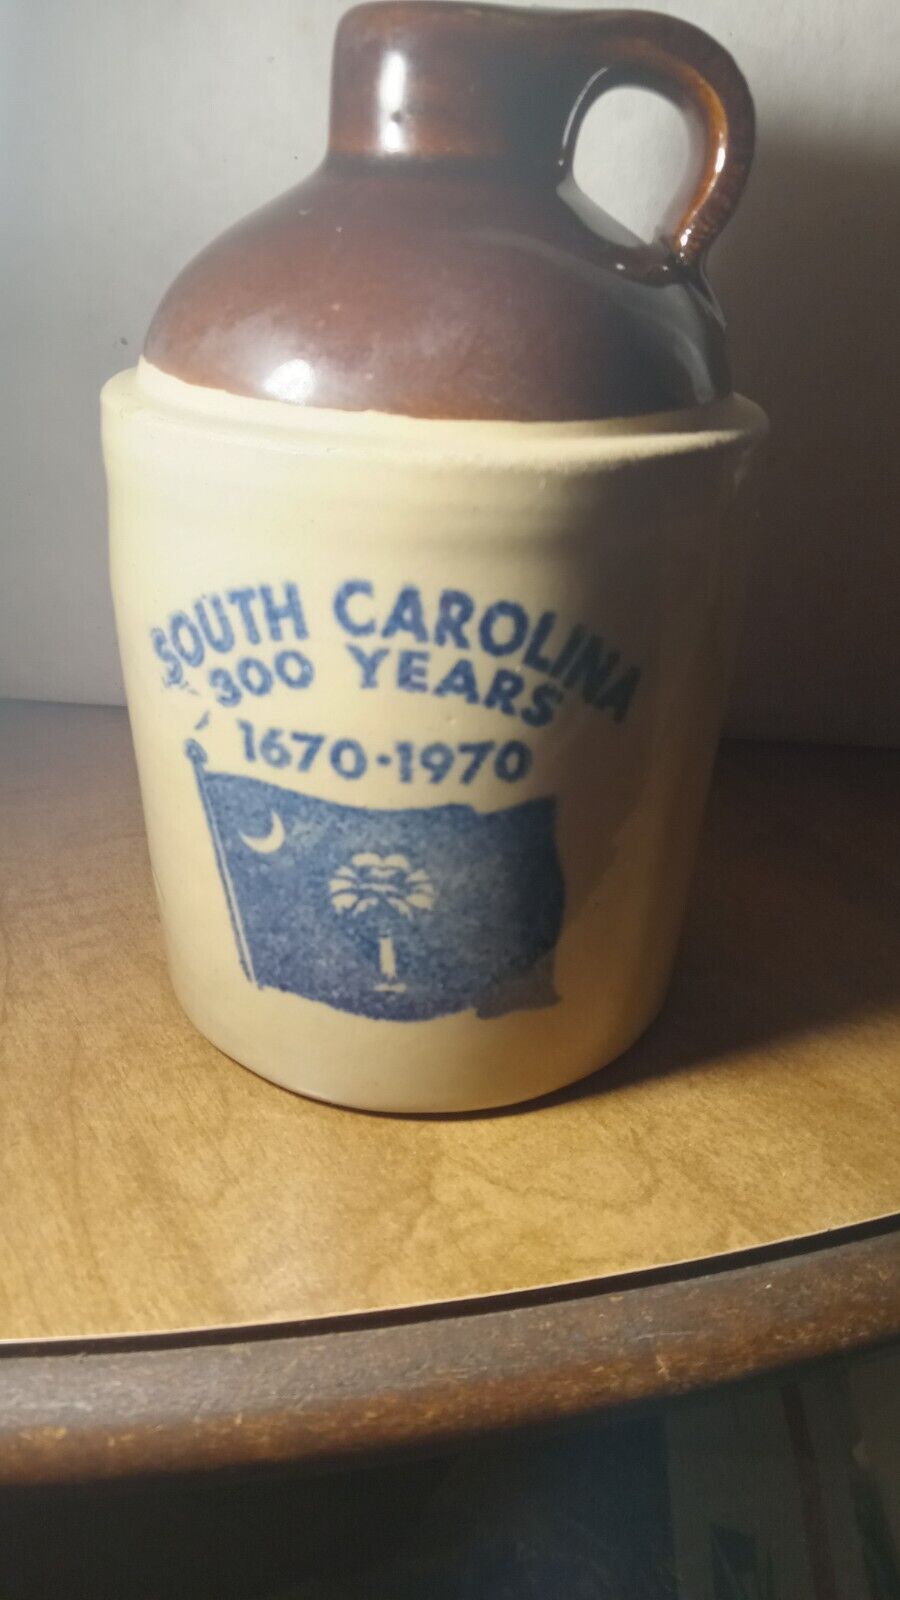 Vintage South Carolina 300 Years Jug  1670-1970 6” Tall